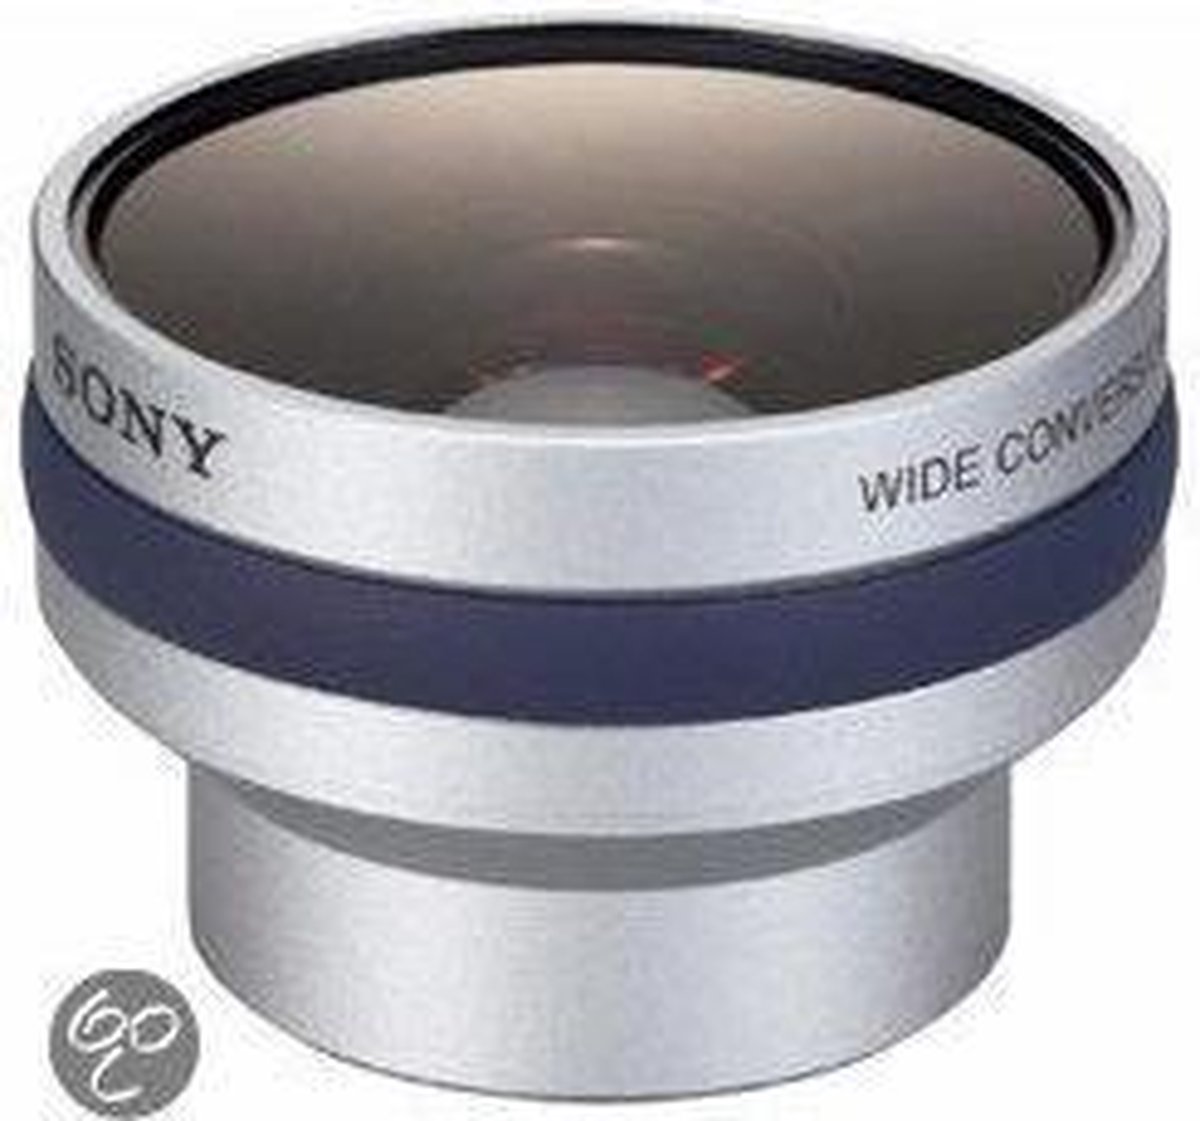 Sony Lense VCL-DH0730